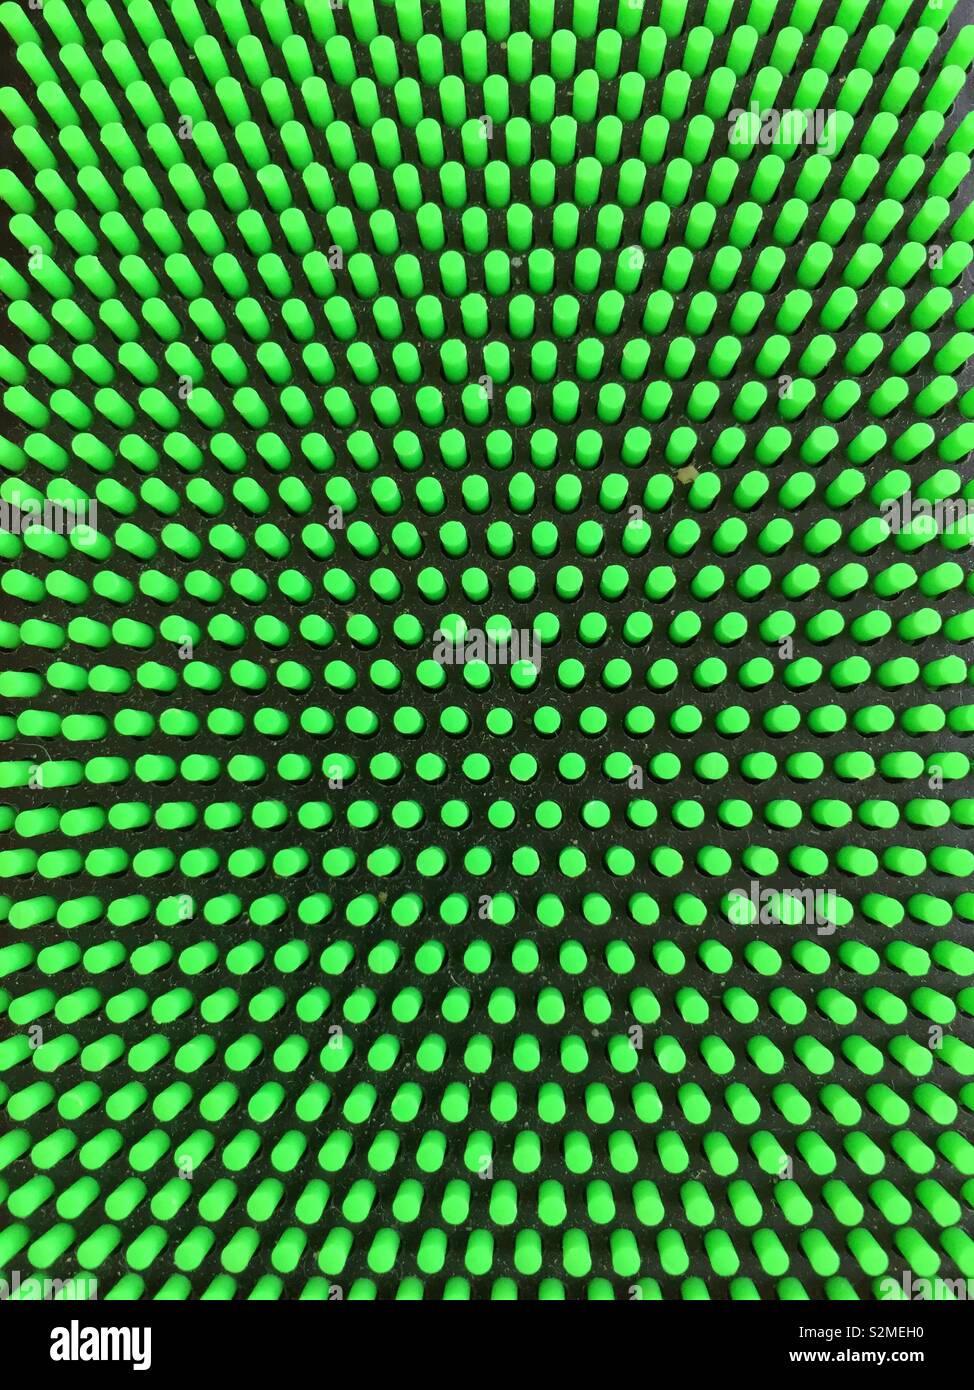 Grün dizzy pattern Dots Stockfoto